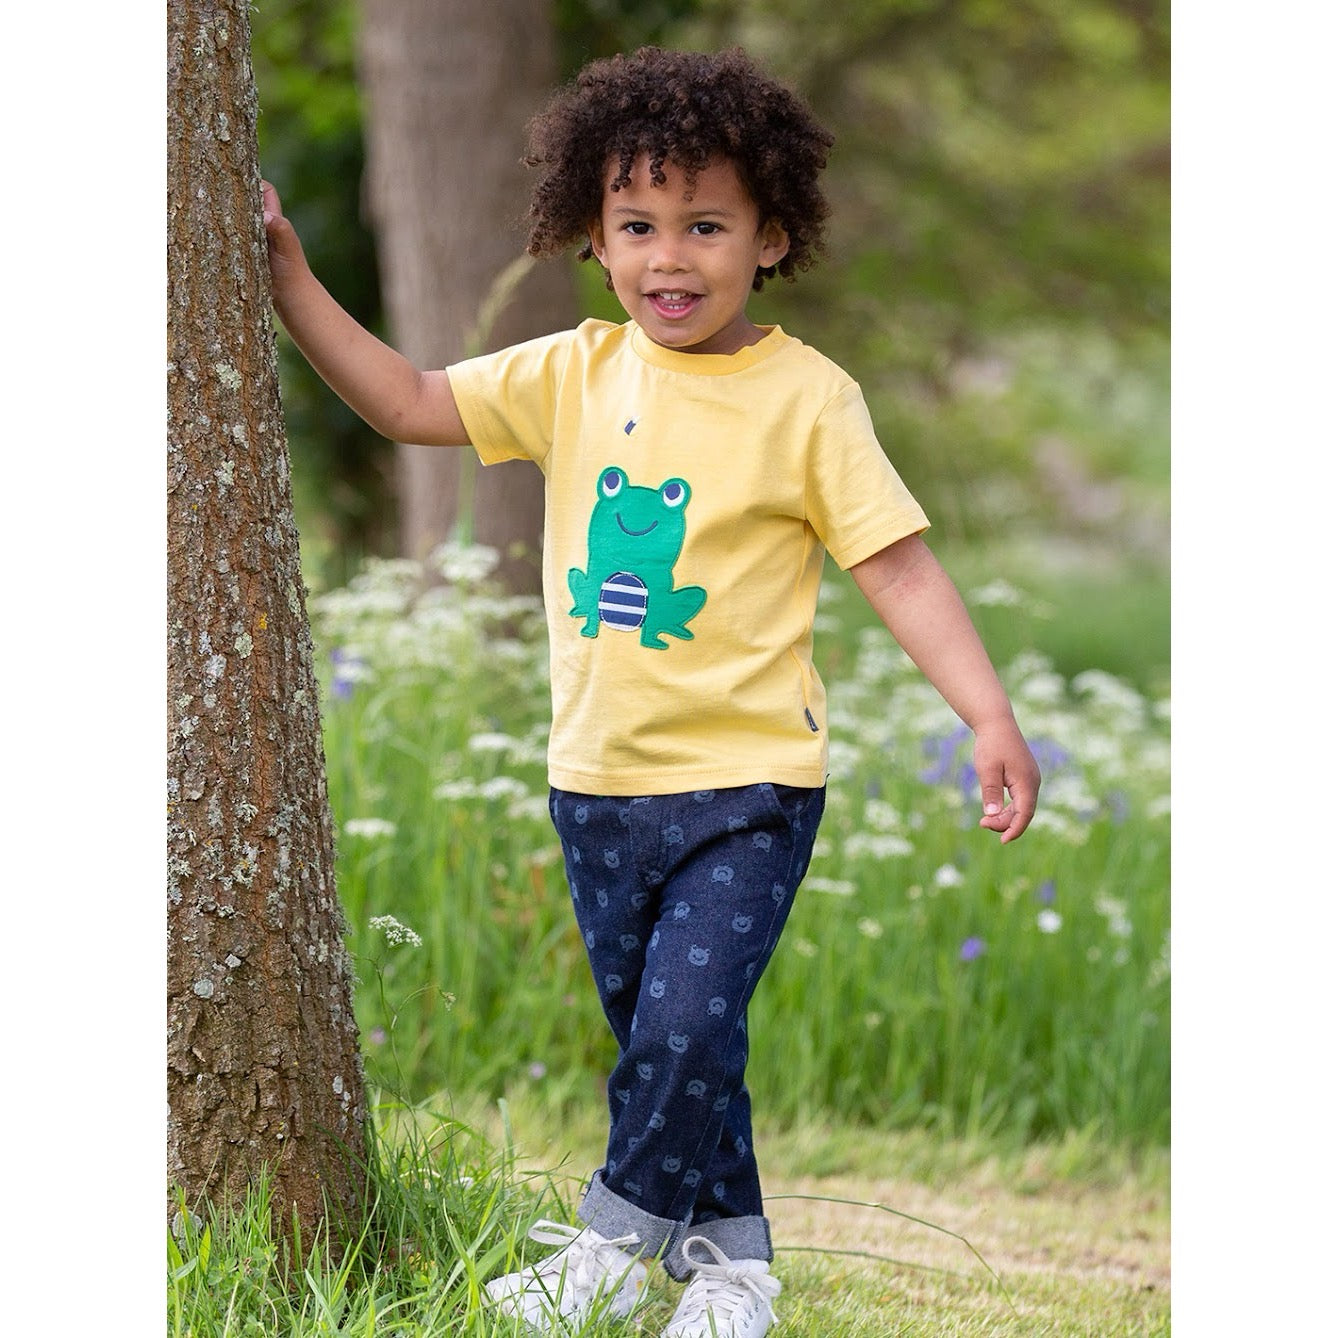 Kite Infant Froggy T-Shirt 41-9154 Clothing 6-9M / Yellow,9-12M / Yellow,12-18M / Yellow,18-24M/2Y / Yellow,3YRS / Yellow,4YRS / Yellow